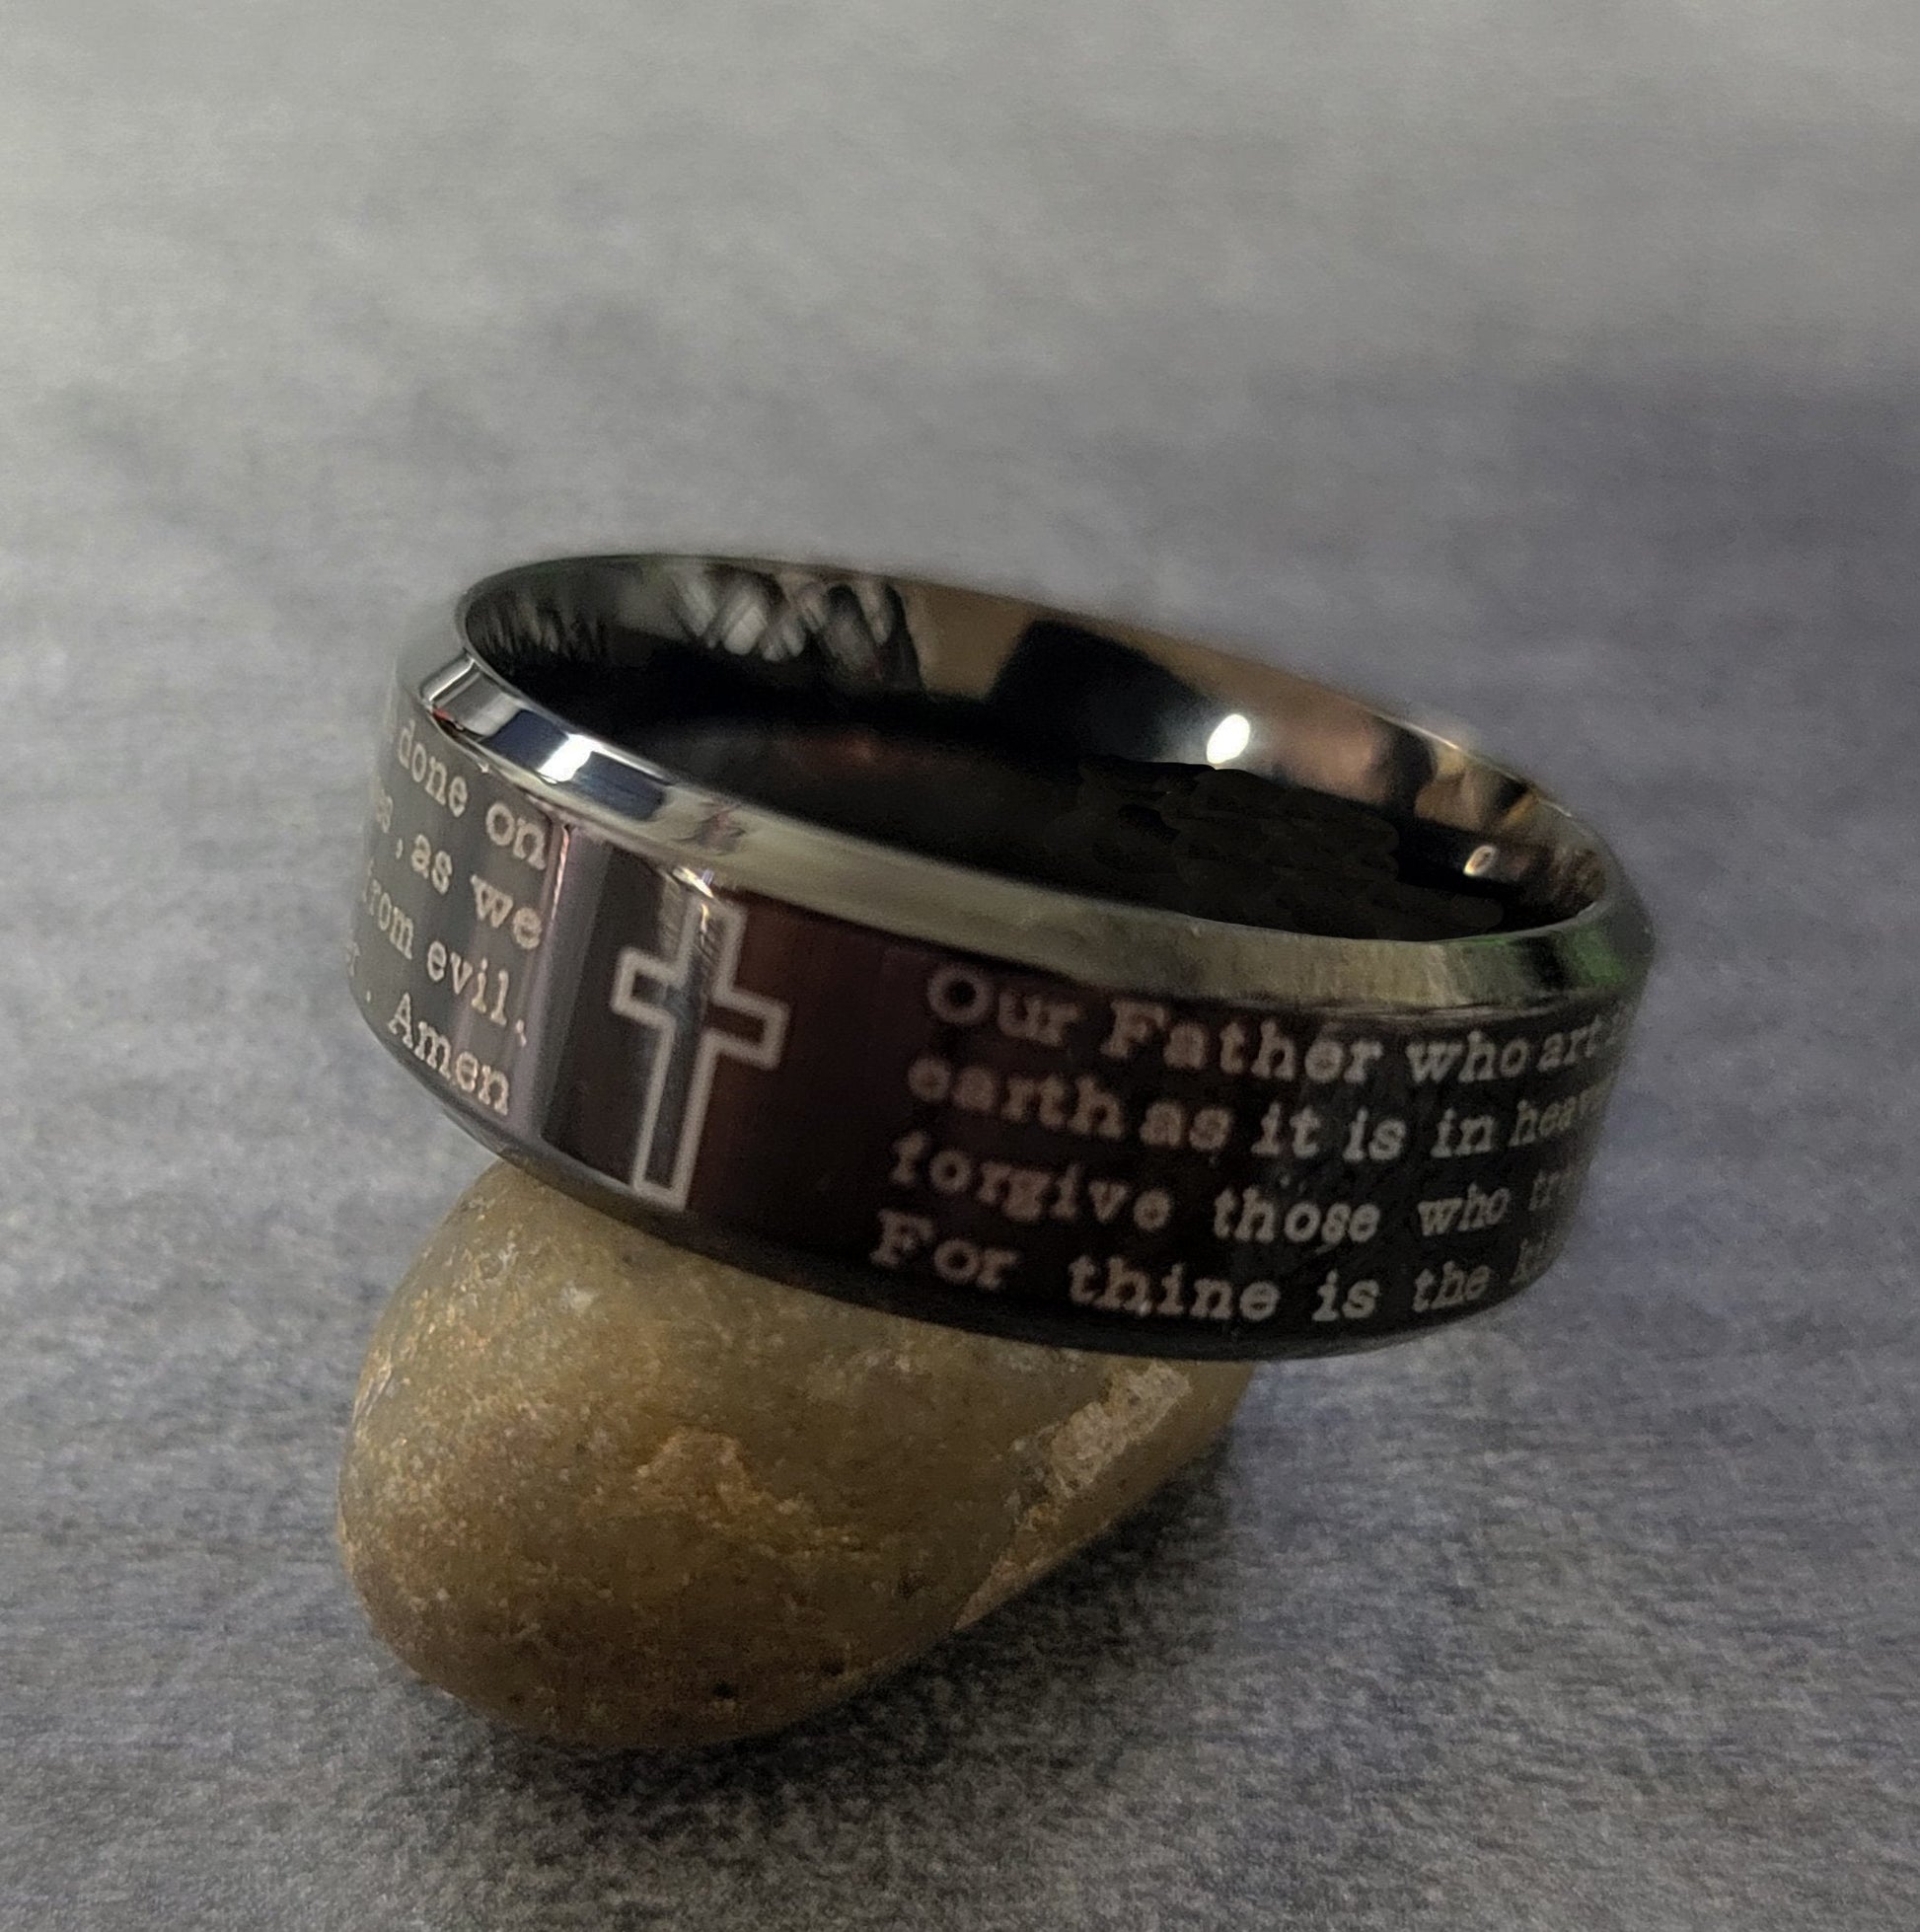 ThinkEngraved Prayer Ring Personalized Christian Cross and Engraved Lord's Prayer Ring Christian Ring